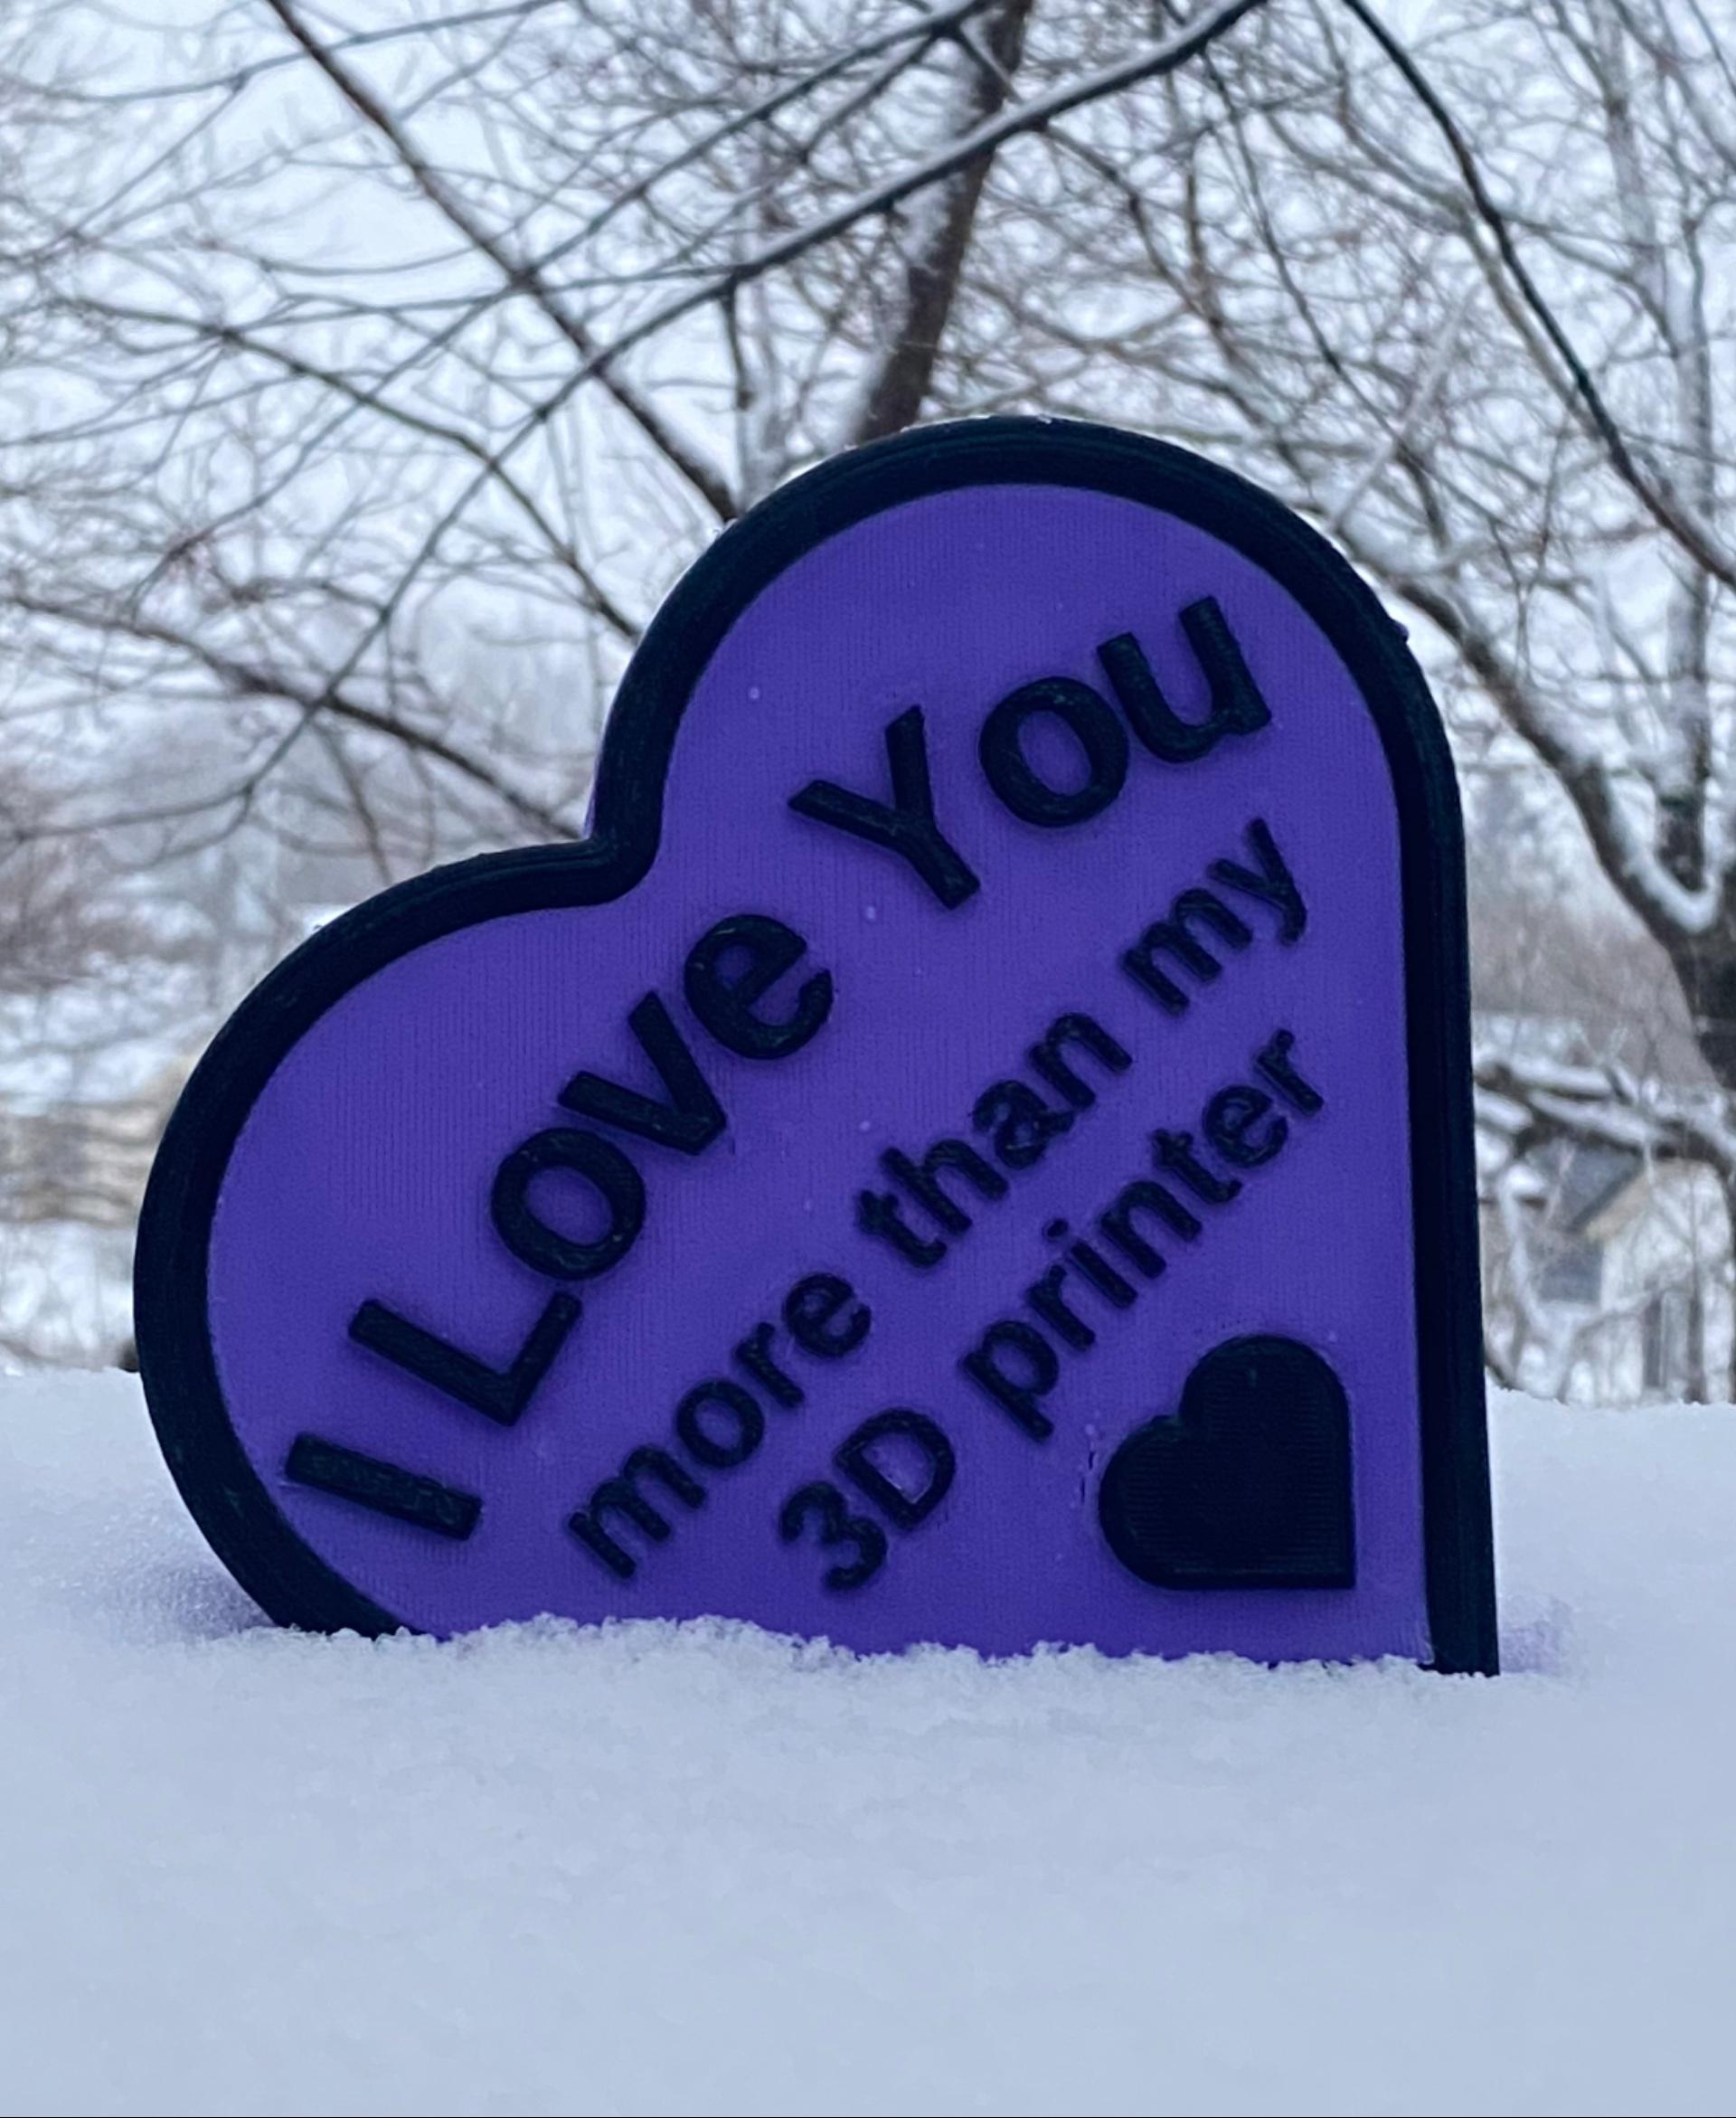 I Love You More Than My 3D Printer - I love you more than my 3d printer - semi blurry because I took pics in a snow storm 😂 
Filament: Bambu
Printer: Bambu p1p - 3d model